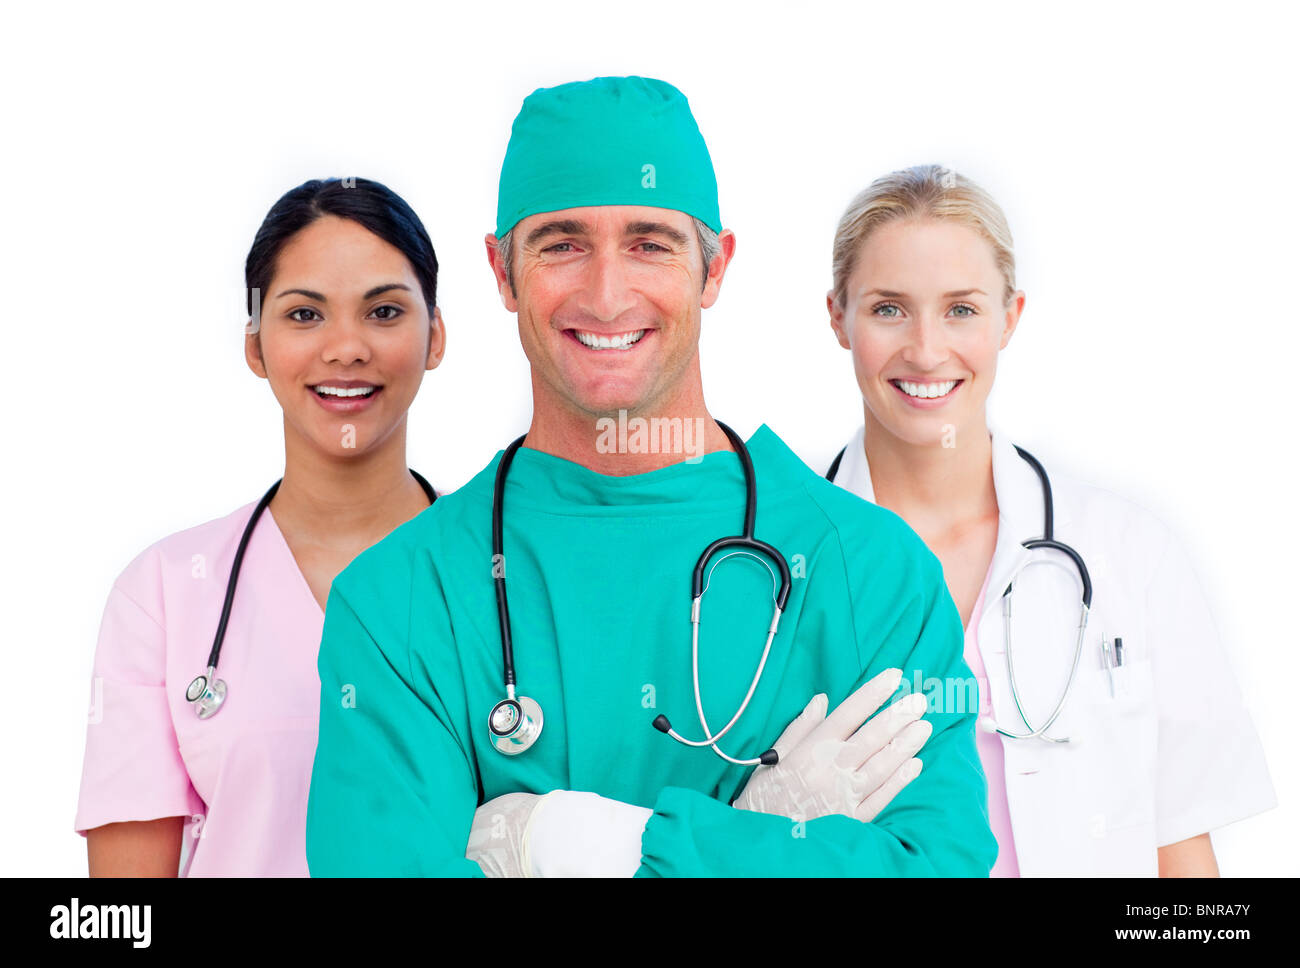 Гб 3 врачи. Команда медиков. Три врача. Команда медсестер. Три врача картинка.